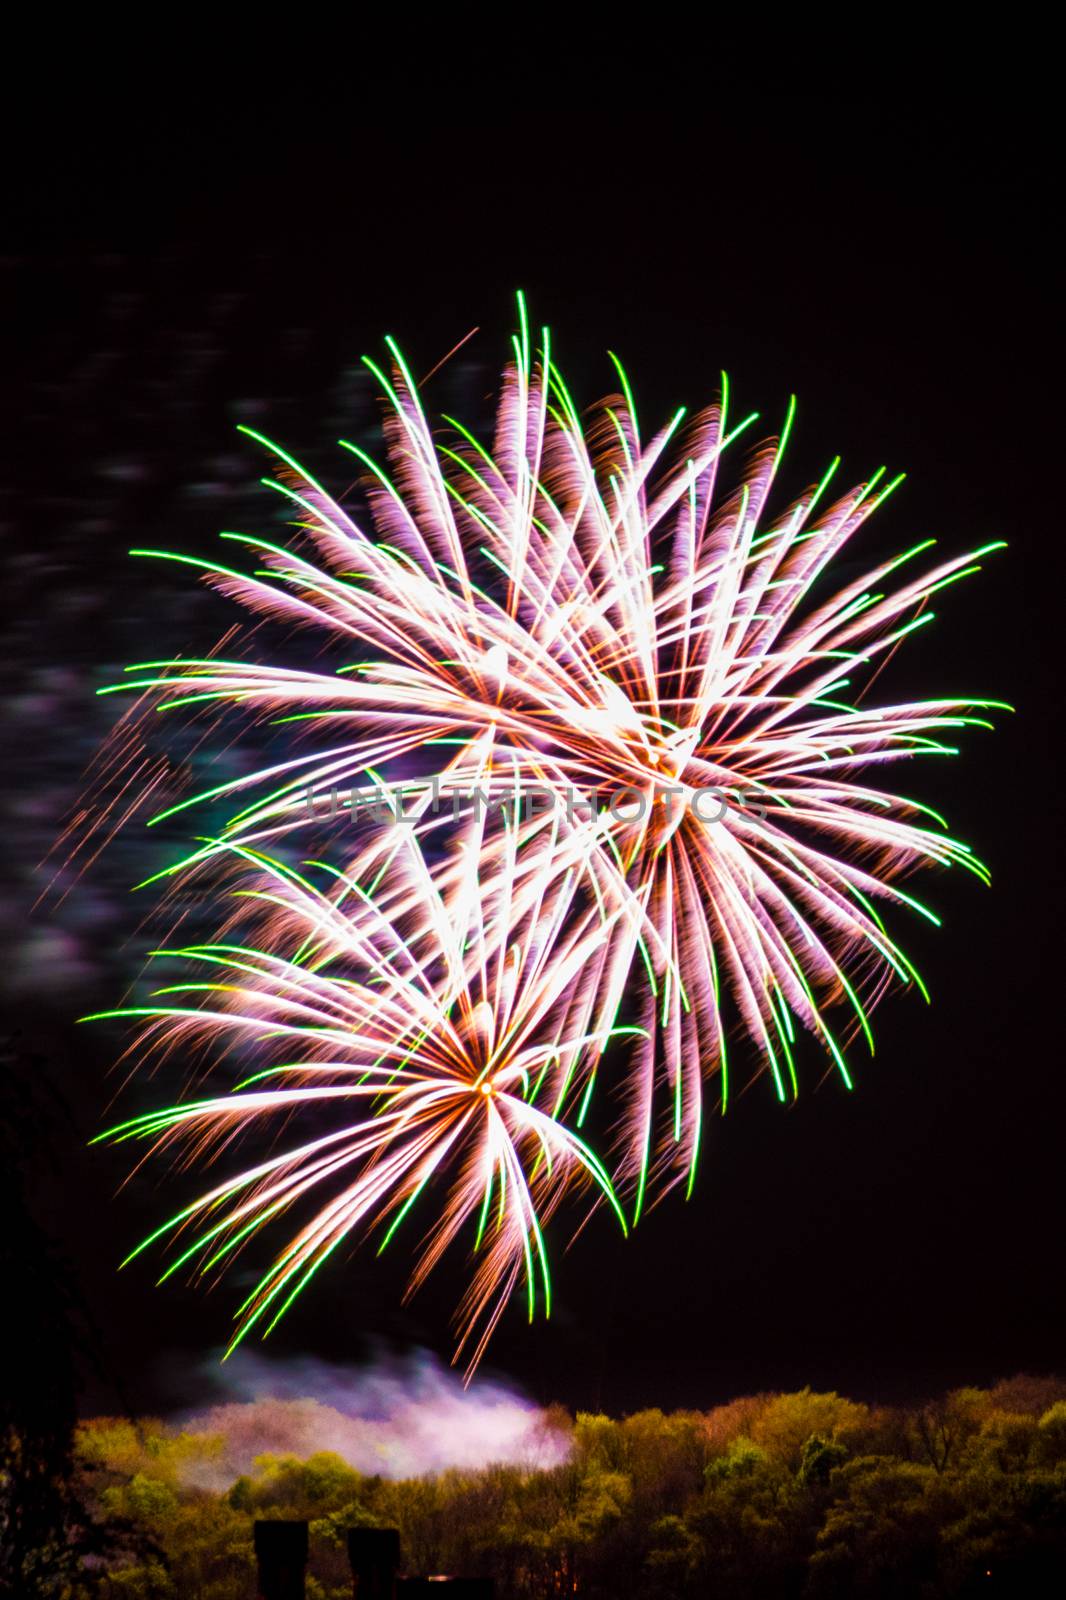 Firework fireworks celebration white purple with green peaks by MXW_Stock